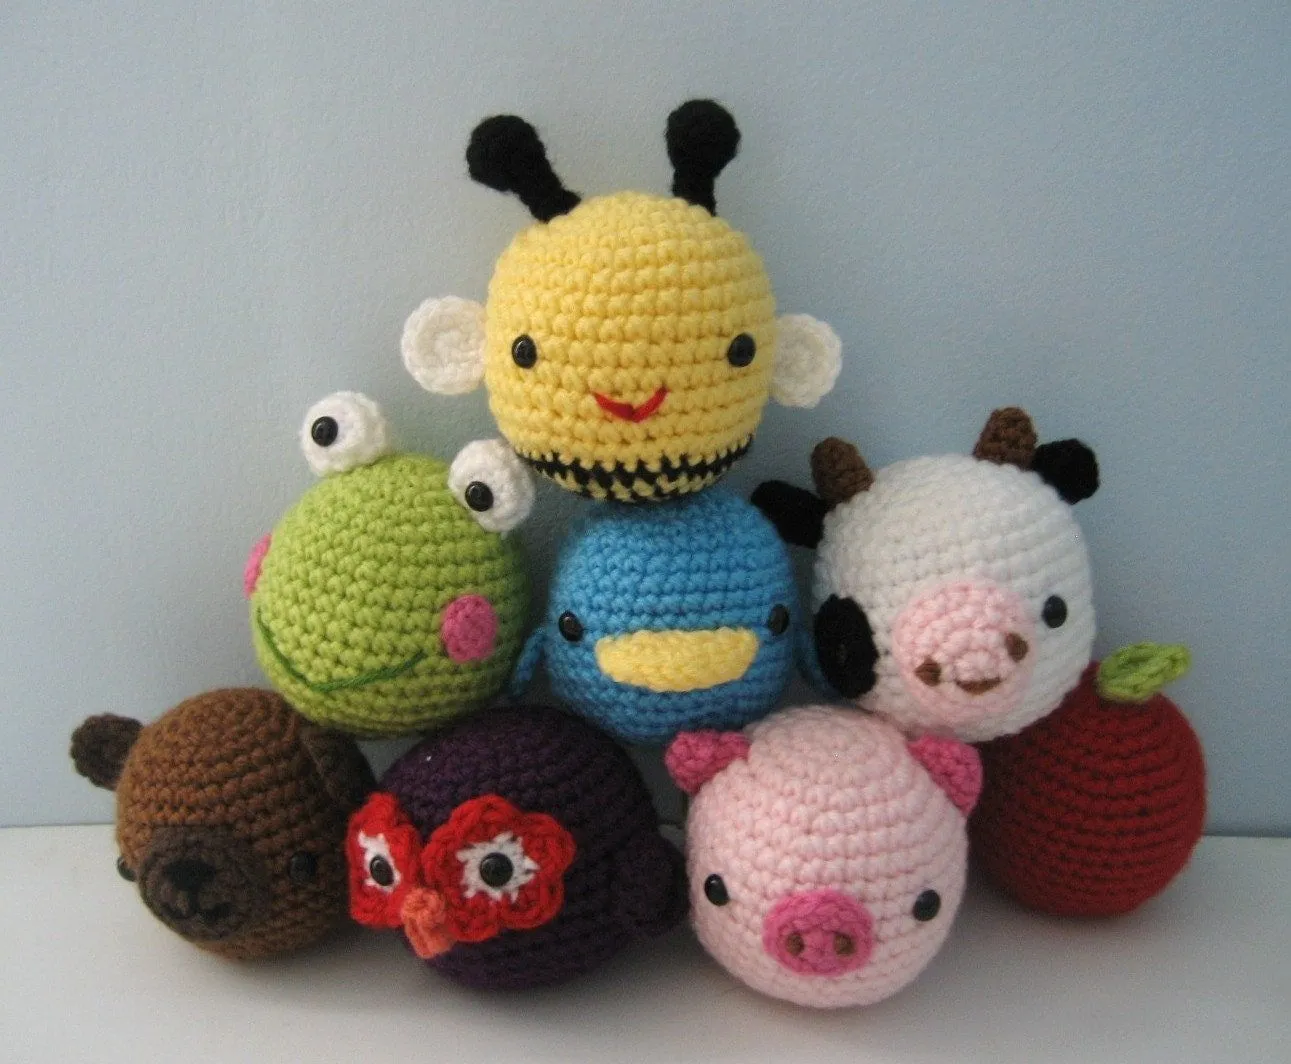 Popular items for crochet animal toy on Etsy